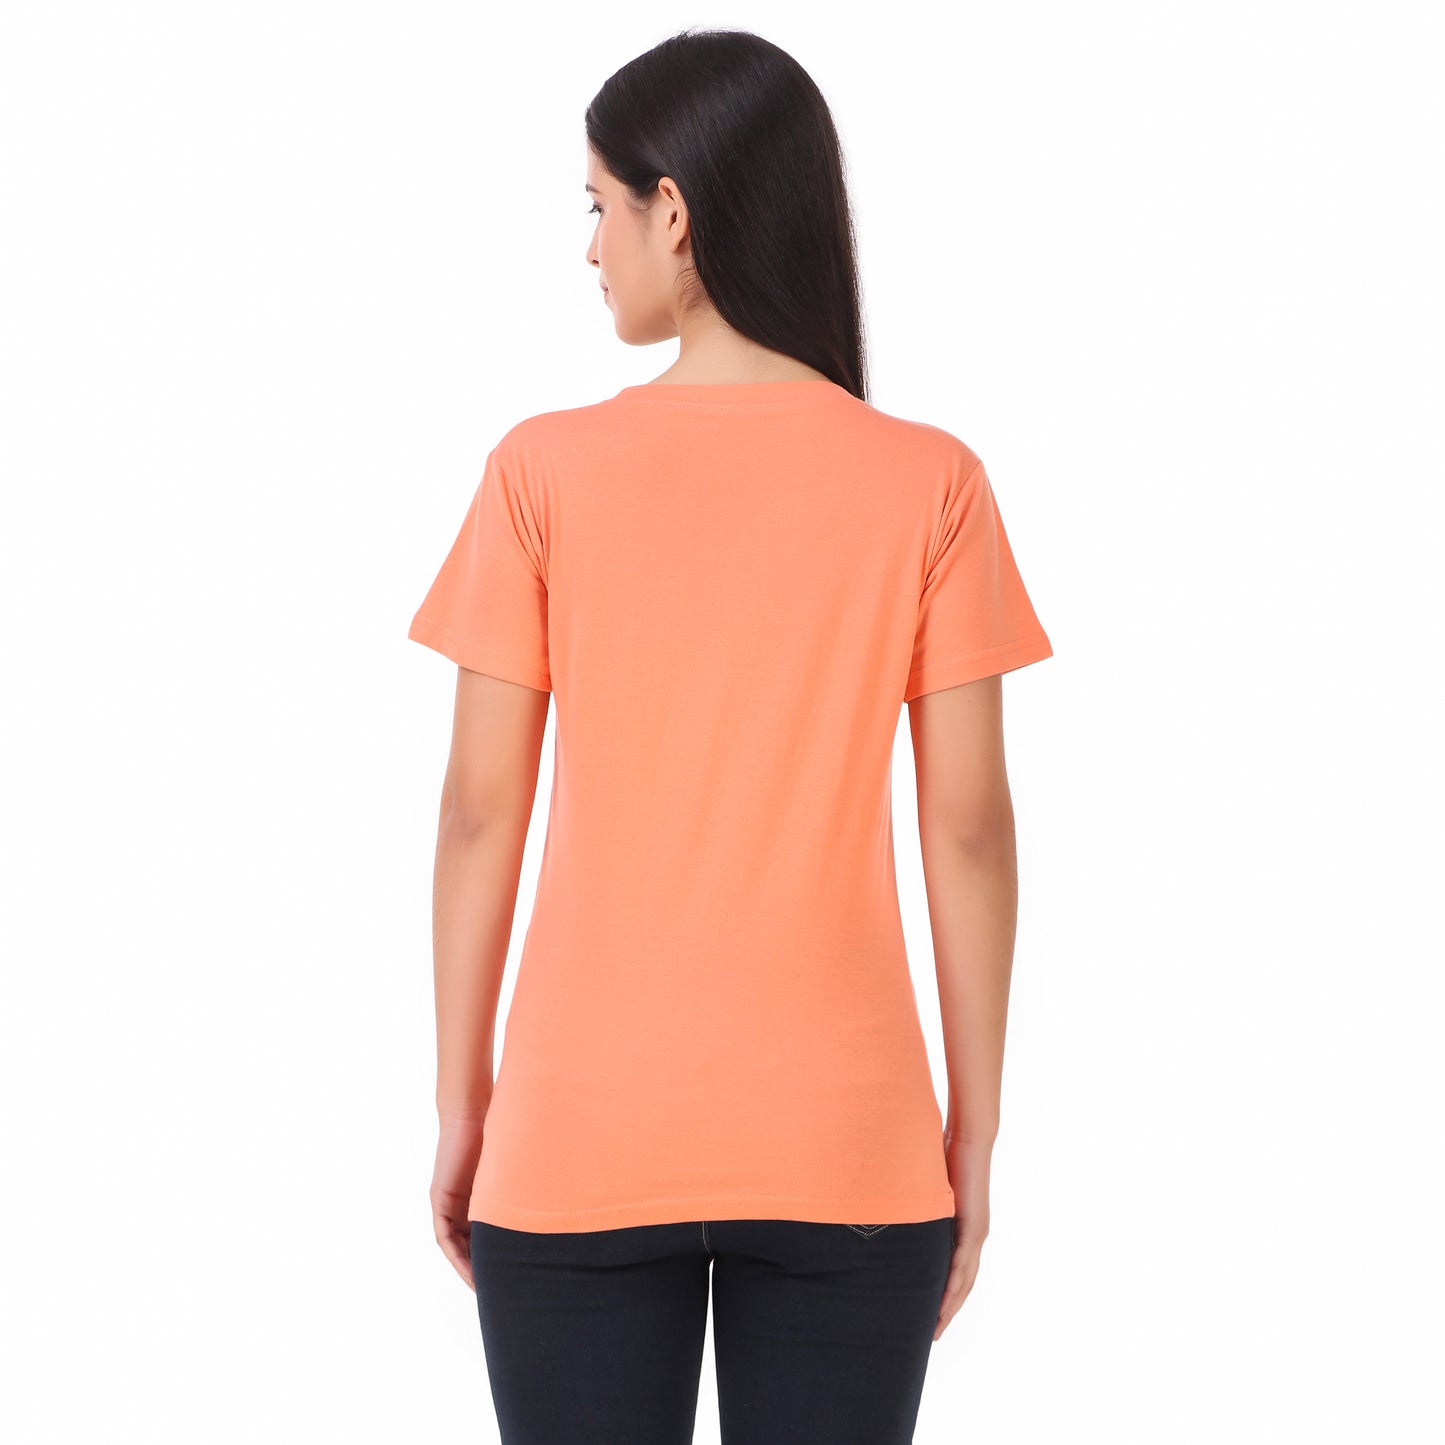 Yellow Tree & Peach Tree Print Combo ( 2 Tops) Trendy T Shirt!!